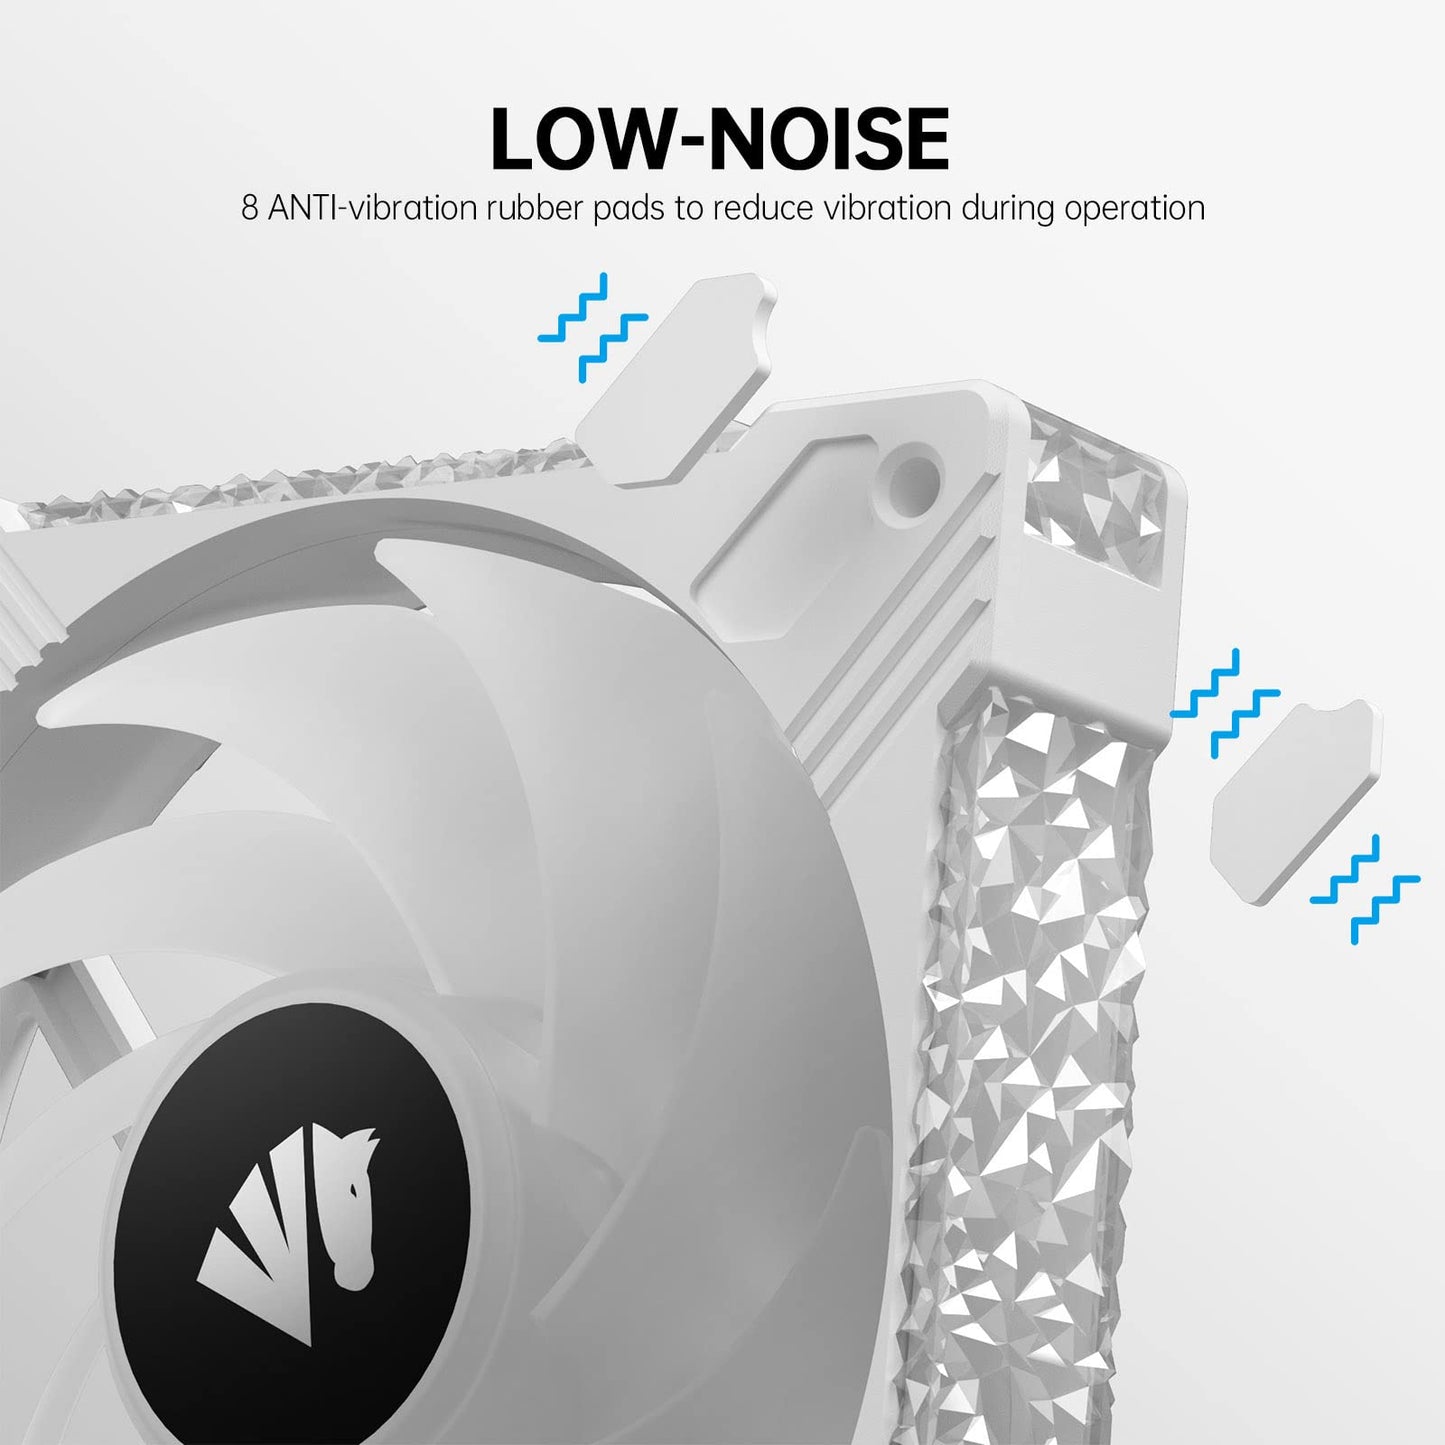 Asiahorse FS-S001 Full Frame Acrylic ARGB 5V Motherboard Sync/Analog PWM Controller 20+8 Addressable LEDs 120mm Hydraulic Bearing White Case/Radiator Fan(5 Pack)